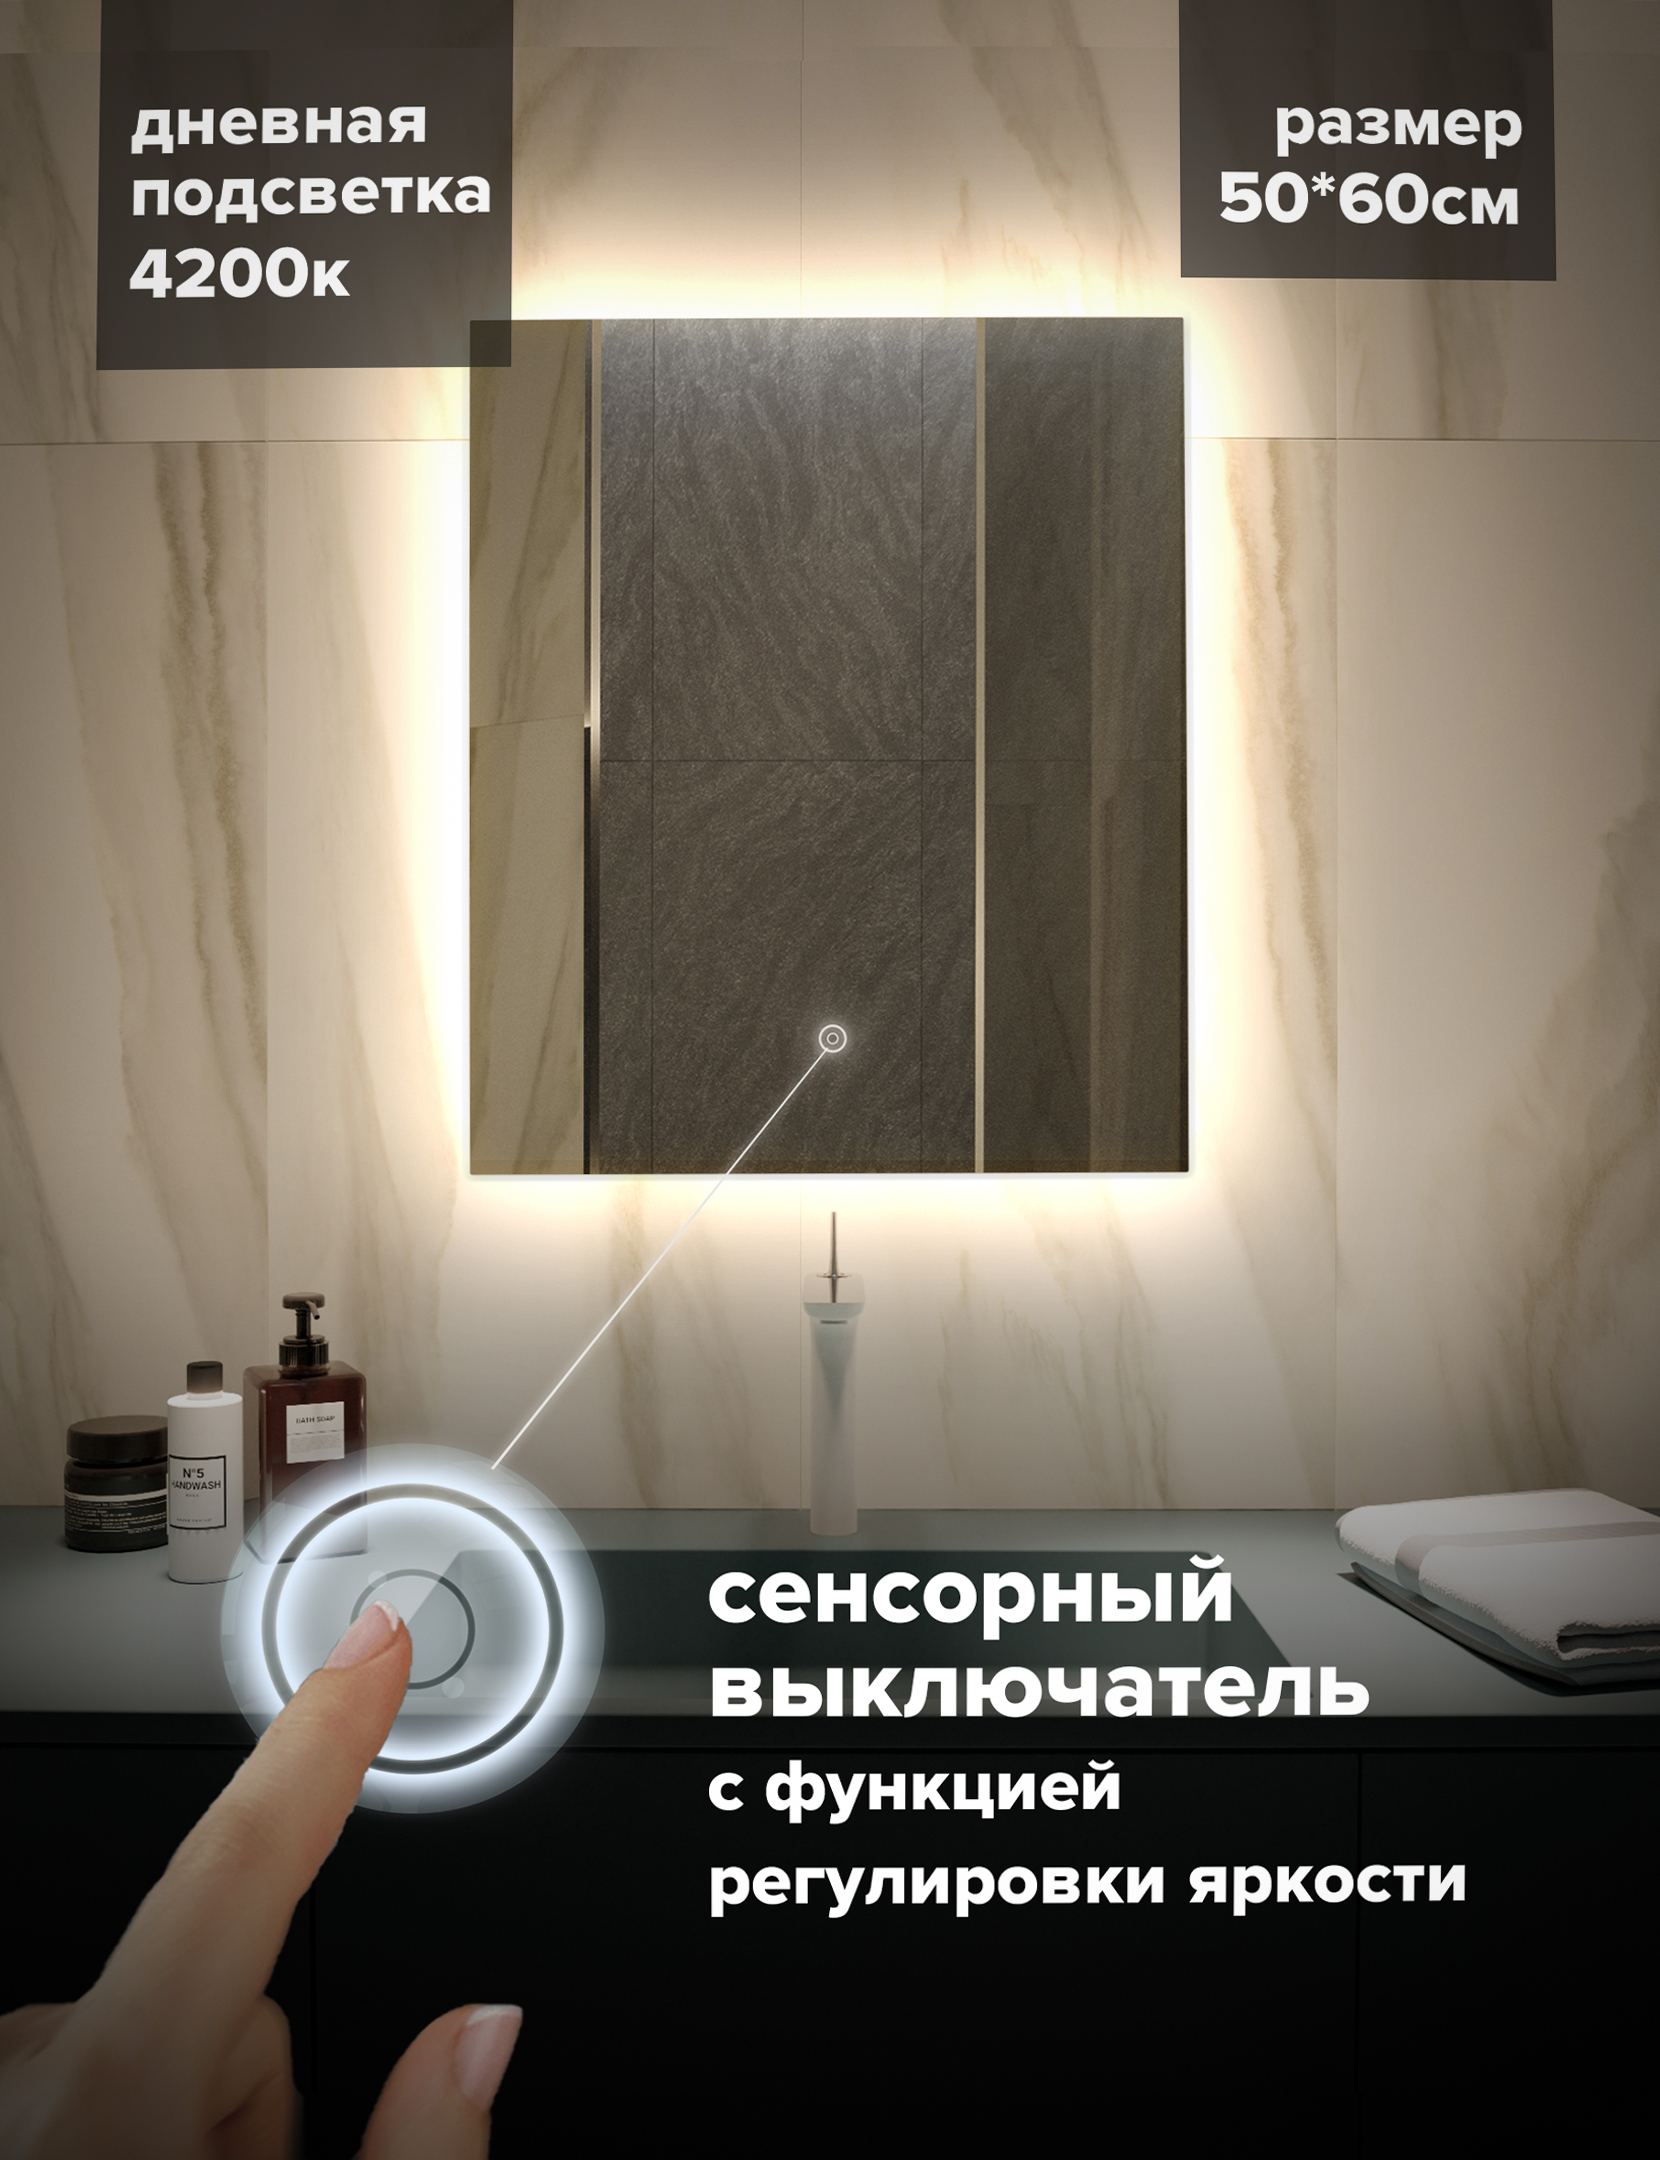 Зеркало для ванной Alfa Mirrors с дневной подсветкой 4200К прямоуг. 50х60см, арт. Ek-56d